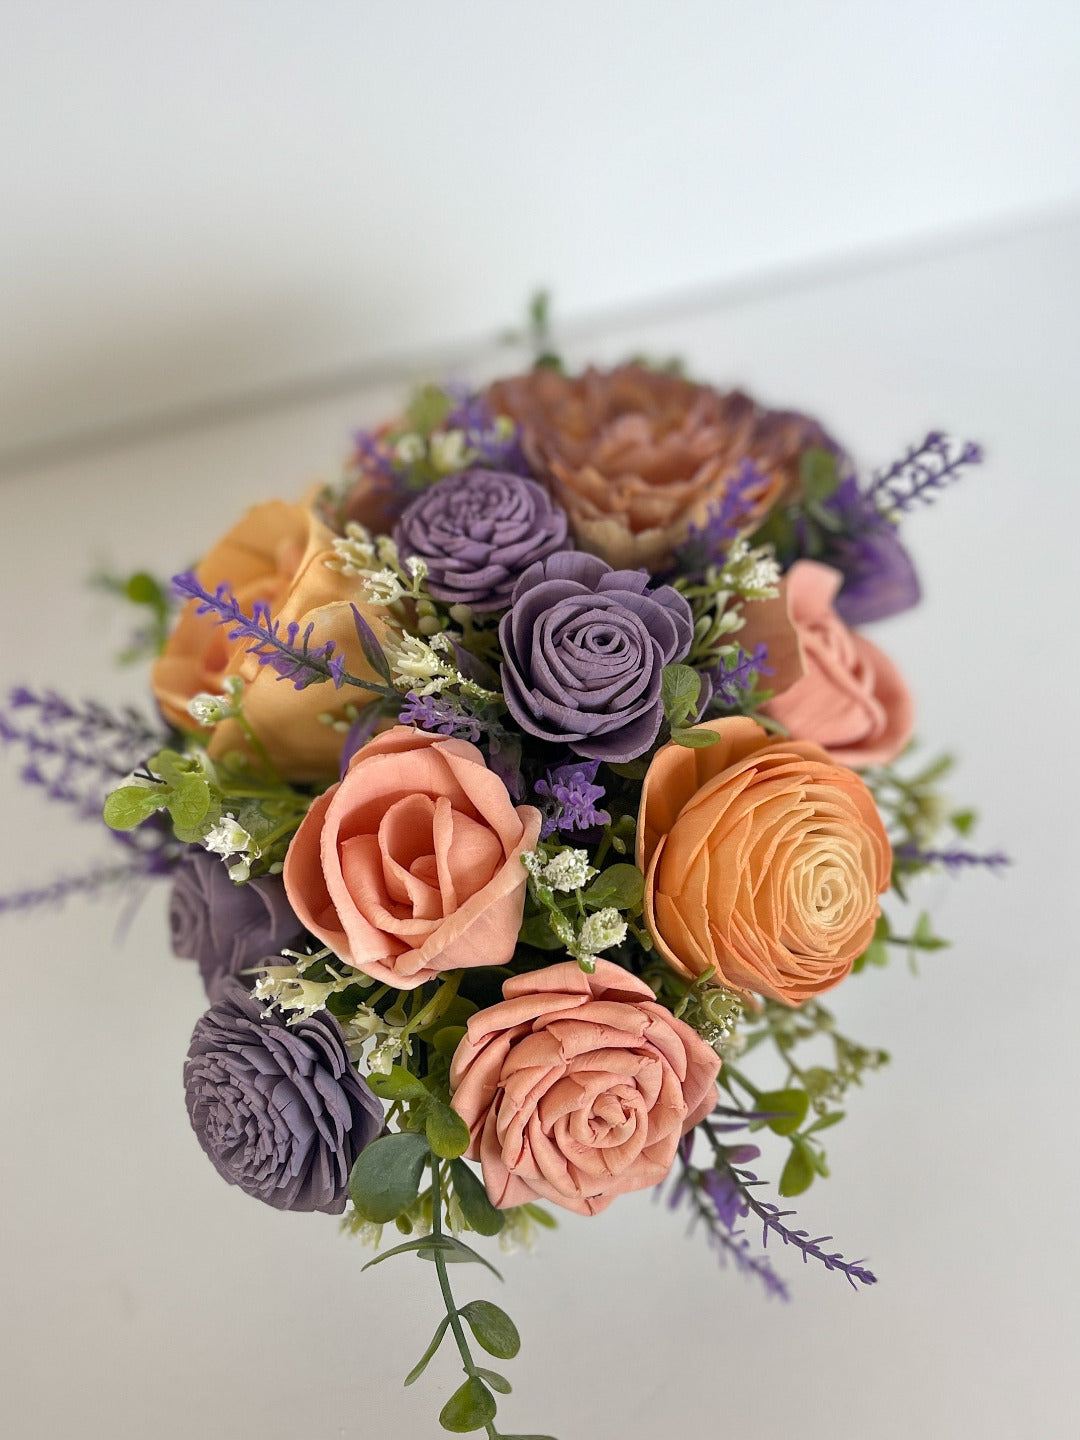 Pastel orange, pink & purple wooden flower bouquet with greenery within silver galvanized planter.